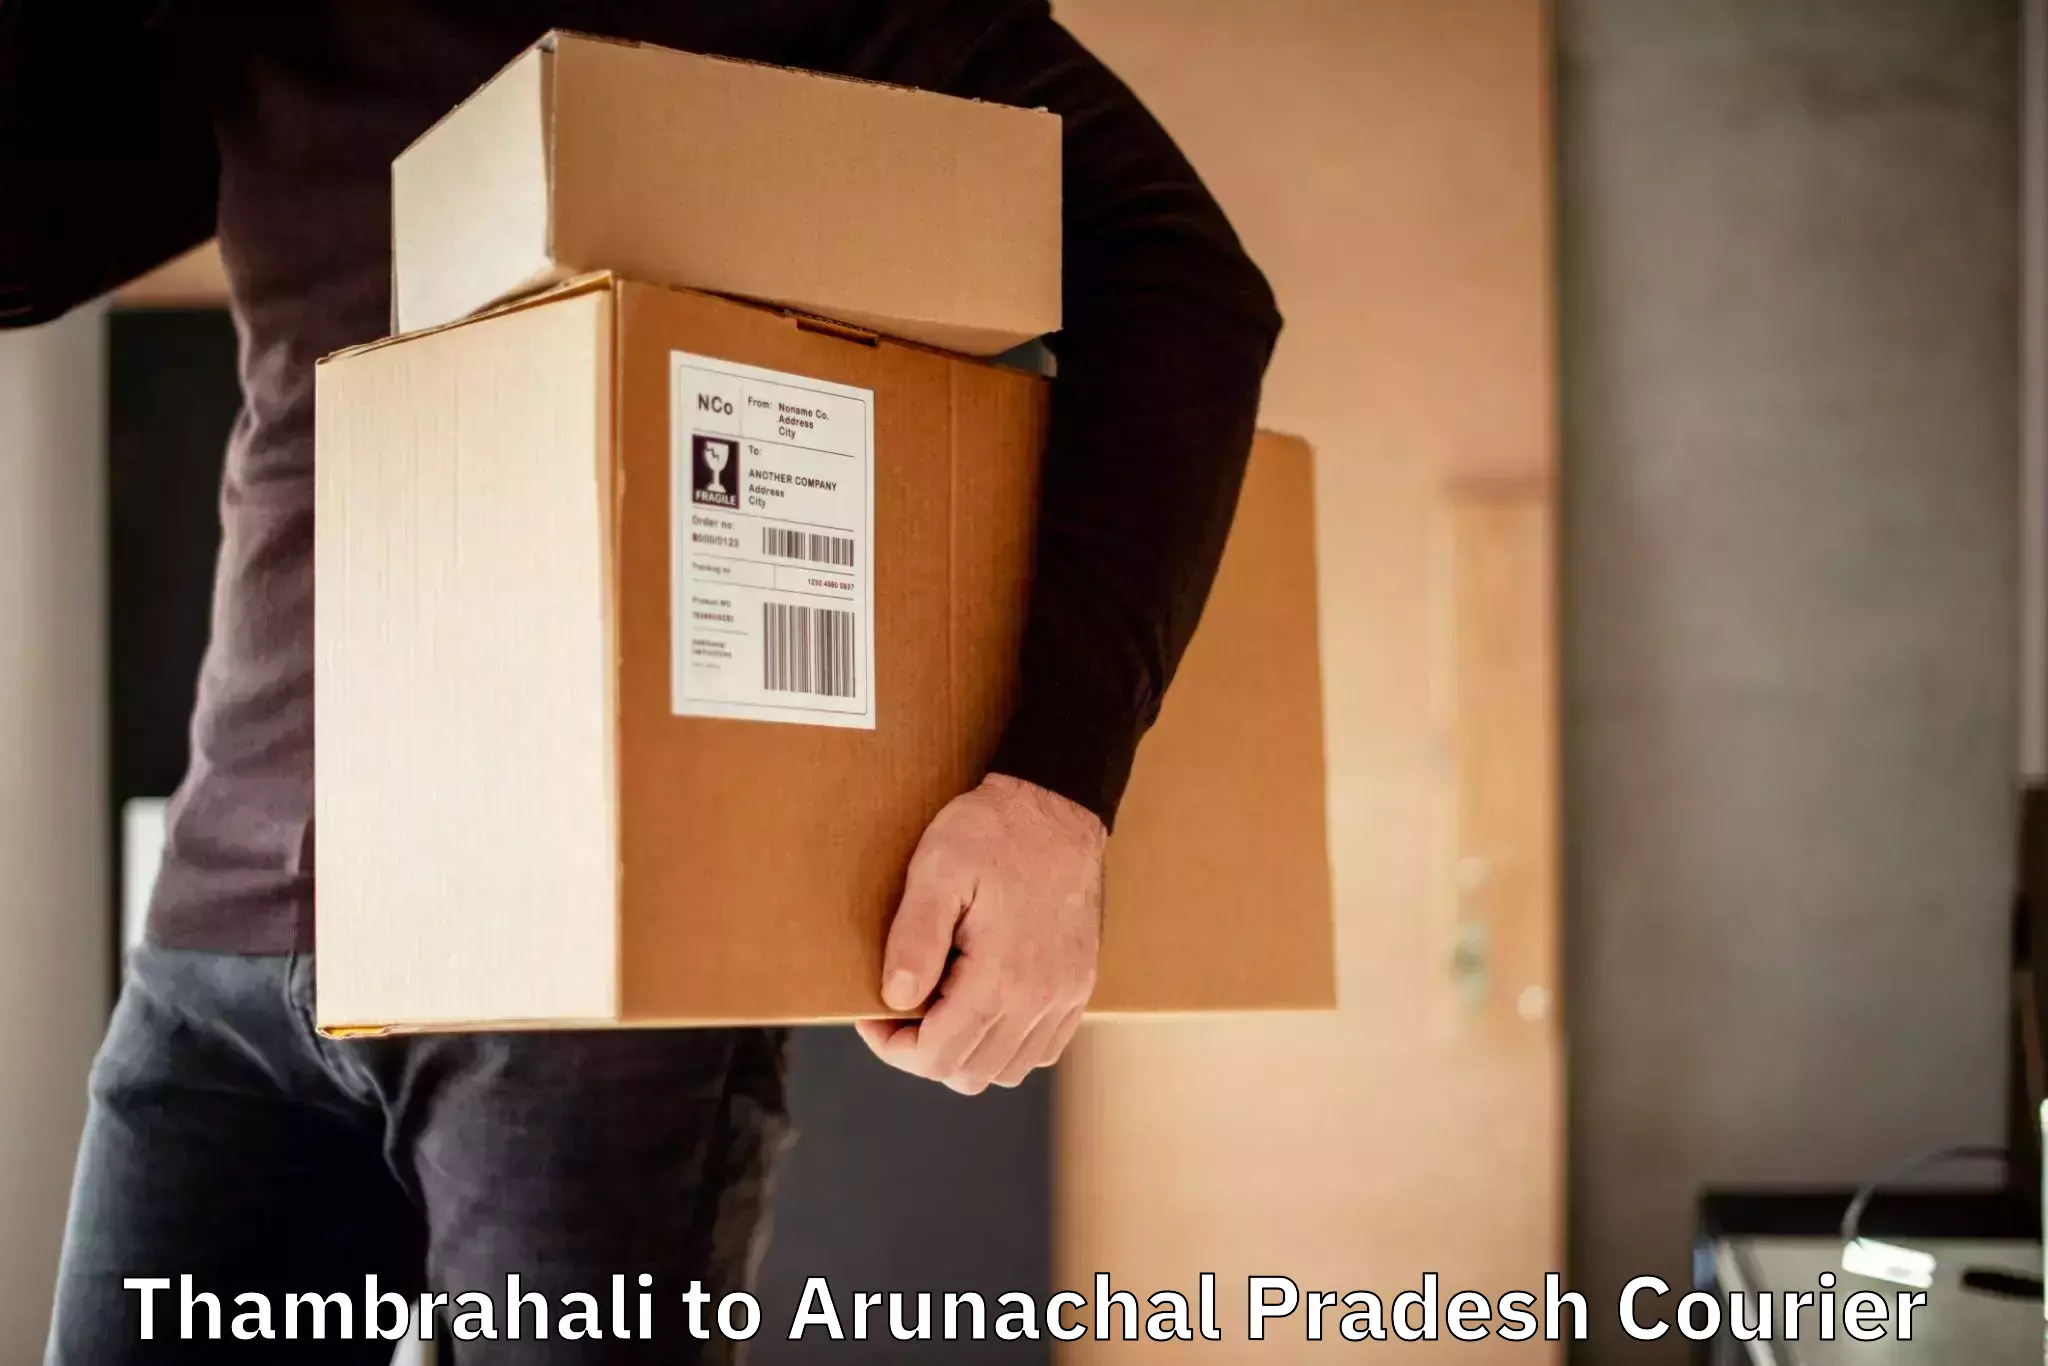 24/7 courier service Thambrahali to Arunachal Pradesh